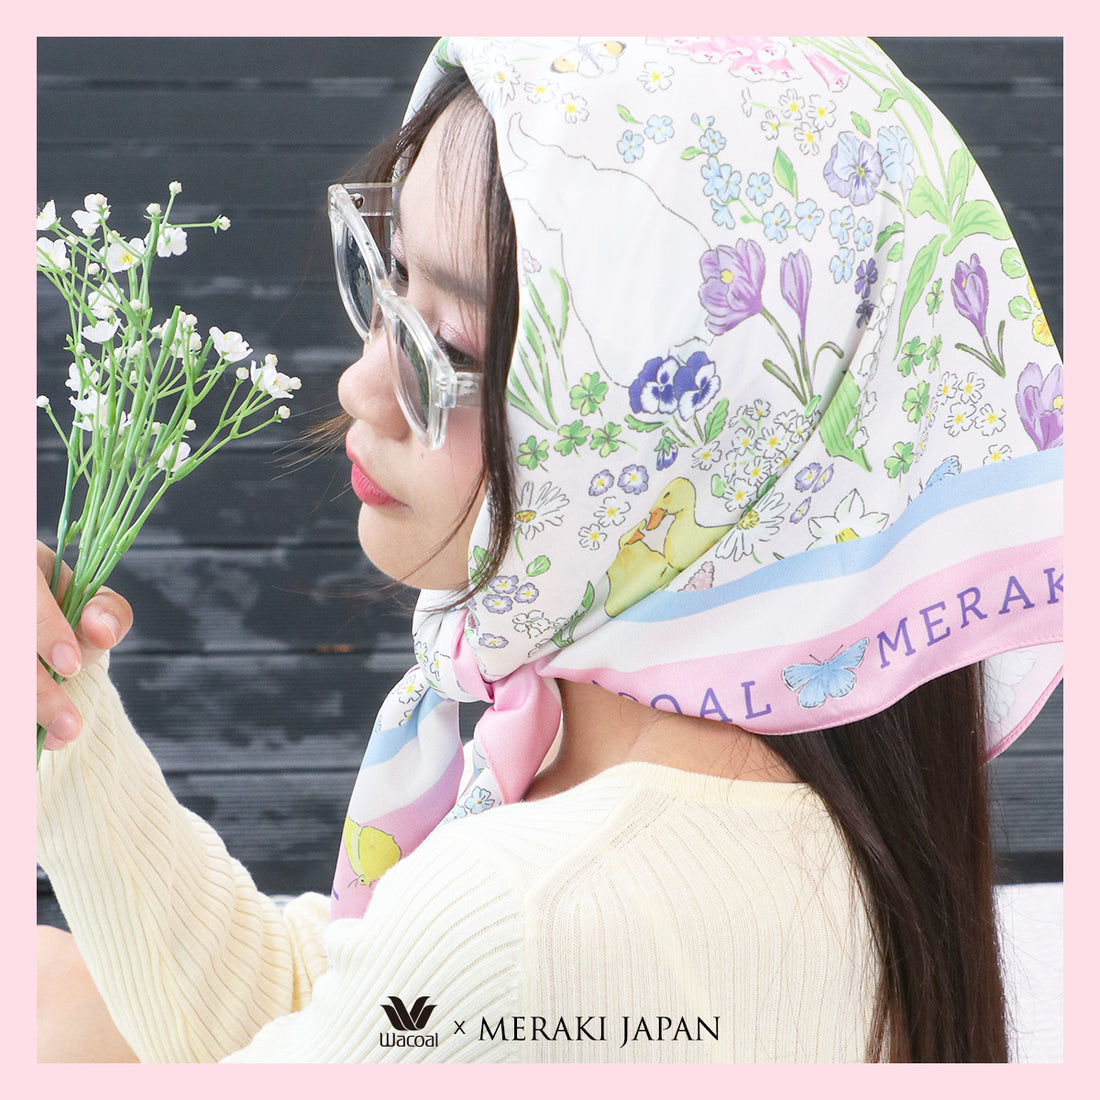 Wacoal x Meraki Rabbit in the Garden shawl/multi-purpose cover, model WW120300PI, pink (PI)